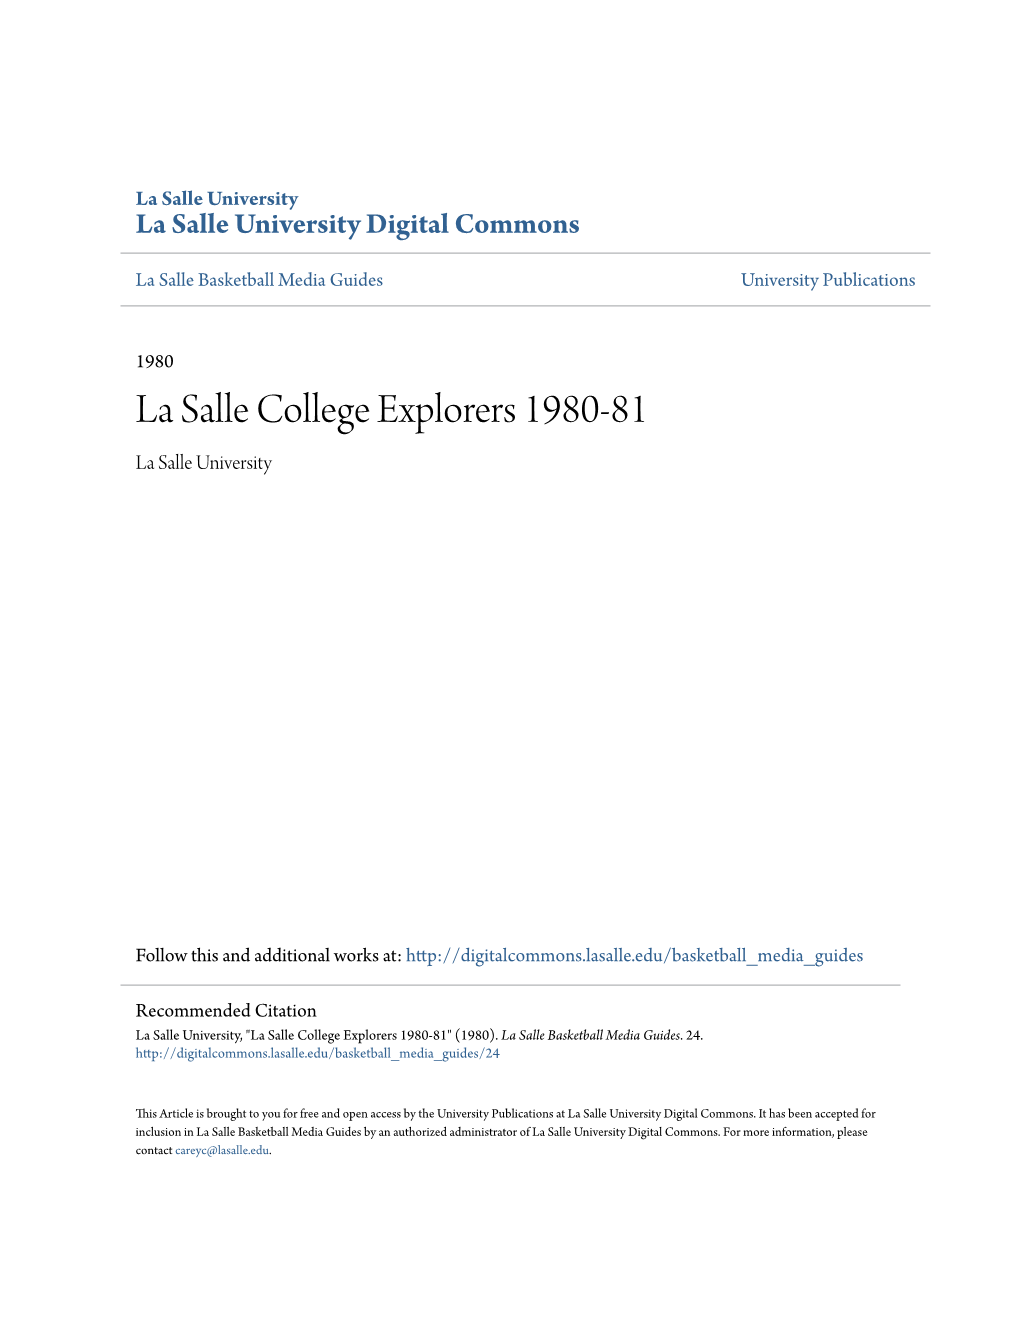 La Salle College Explorers 1980-81 La Salle University